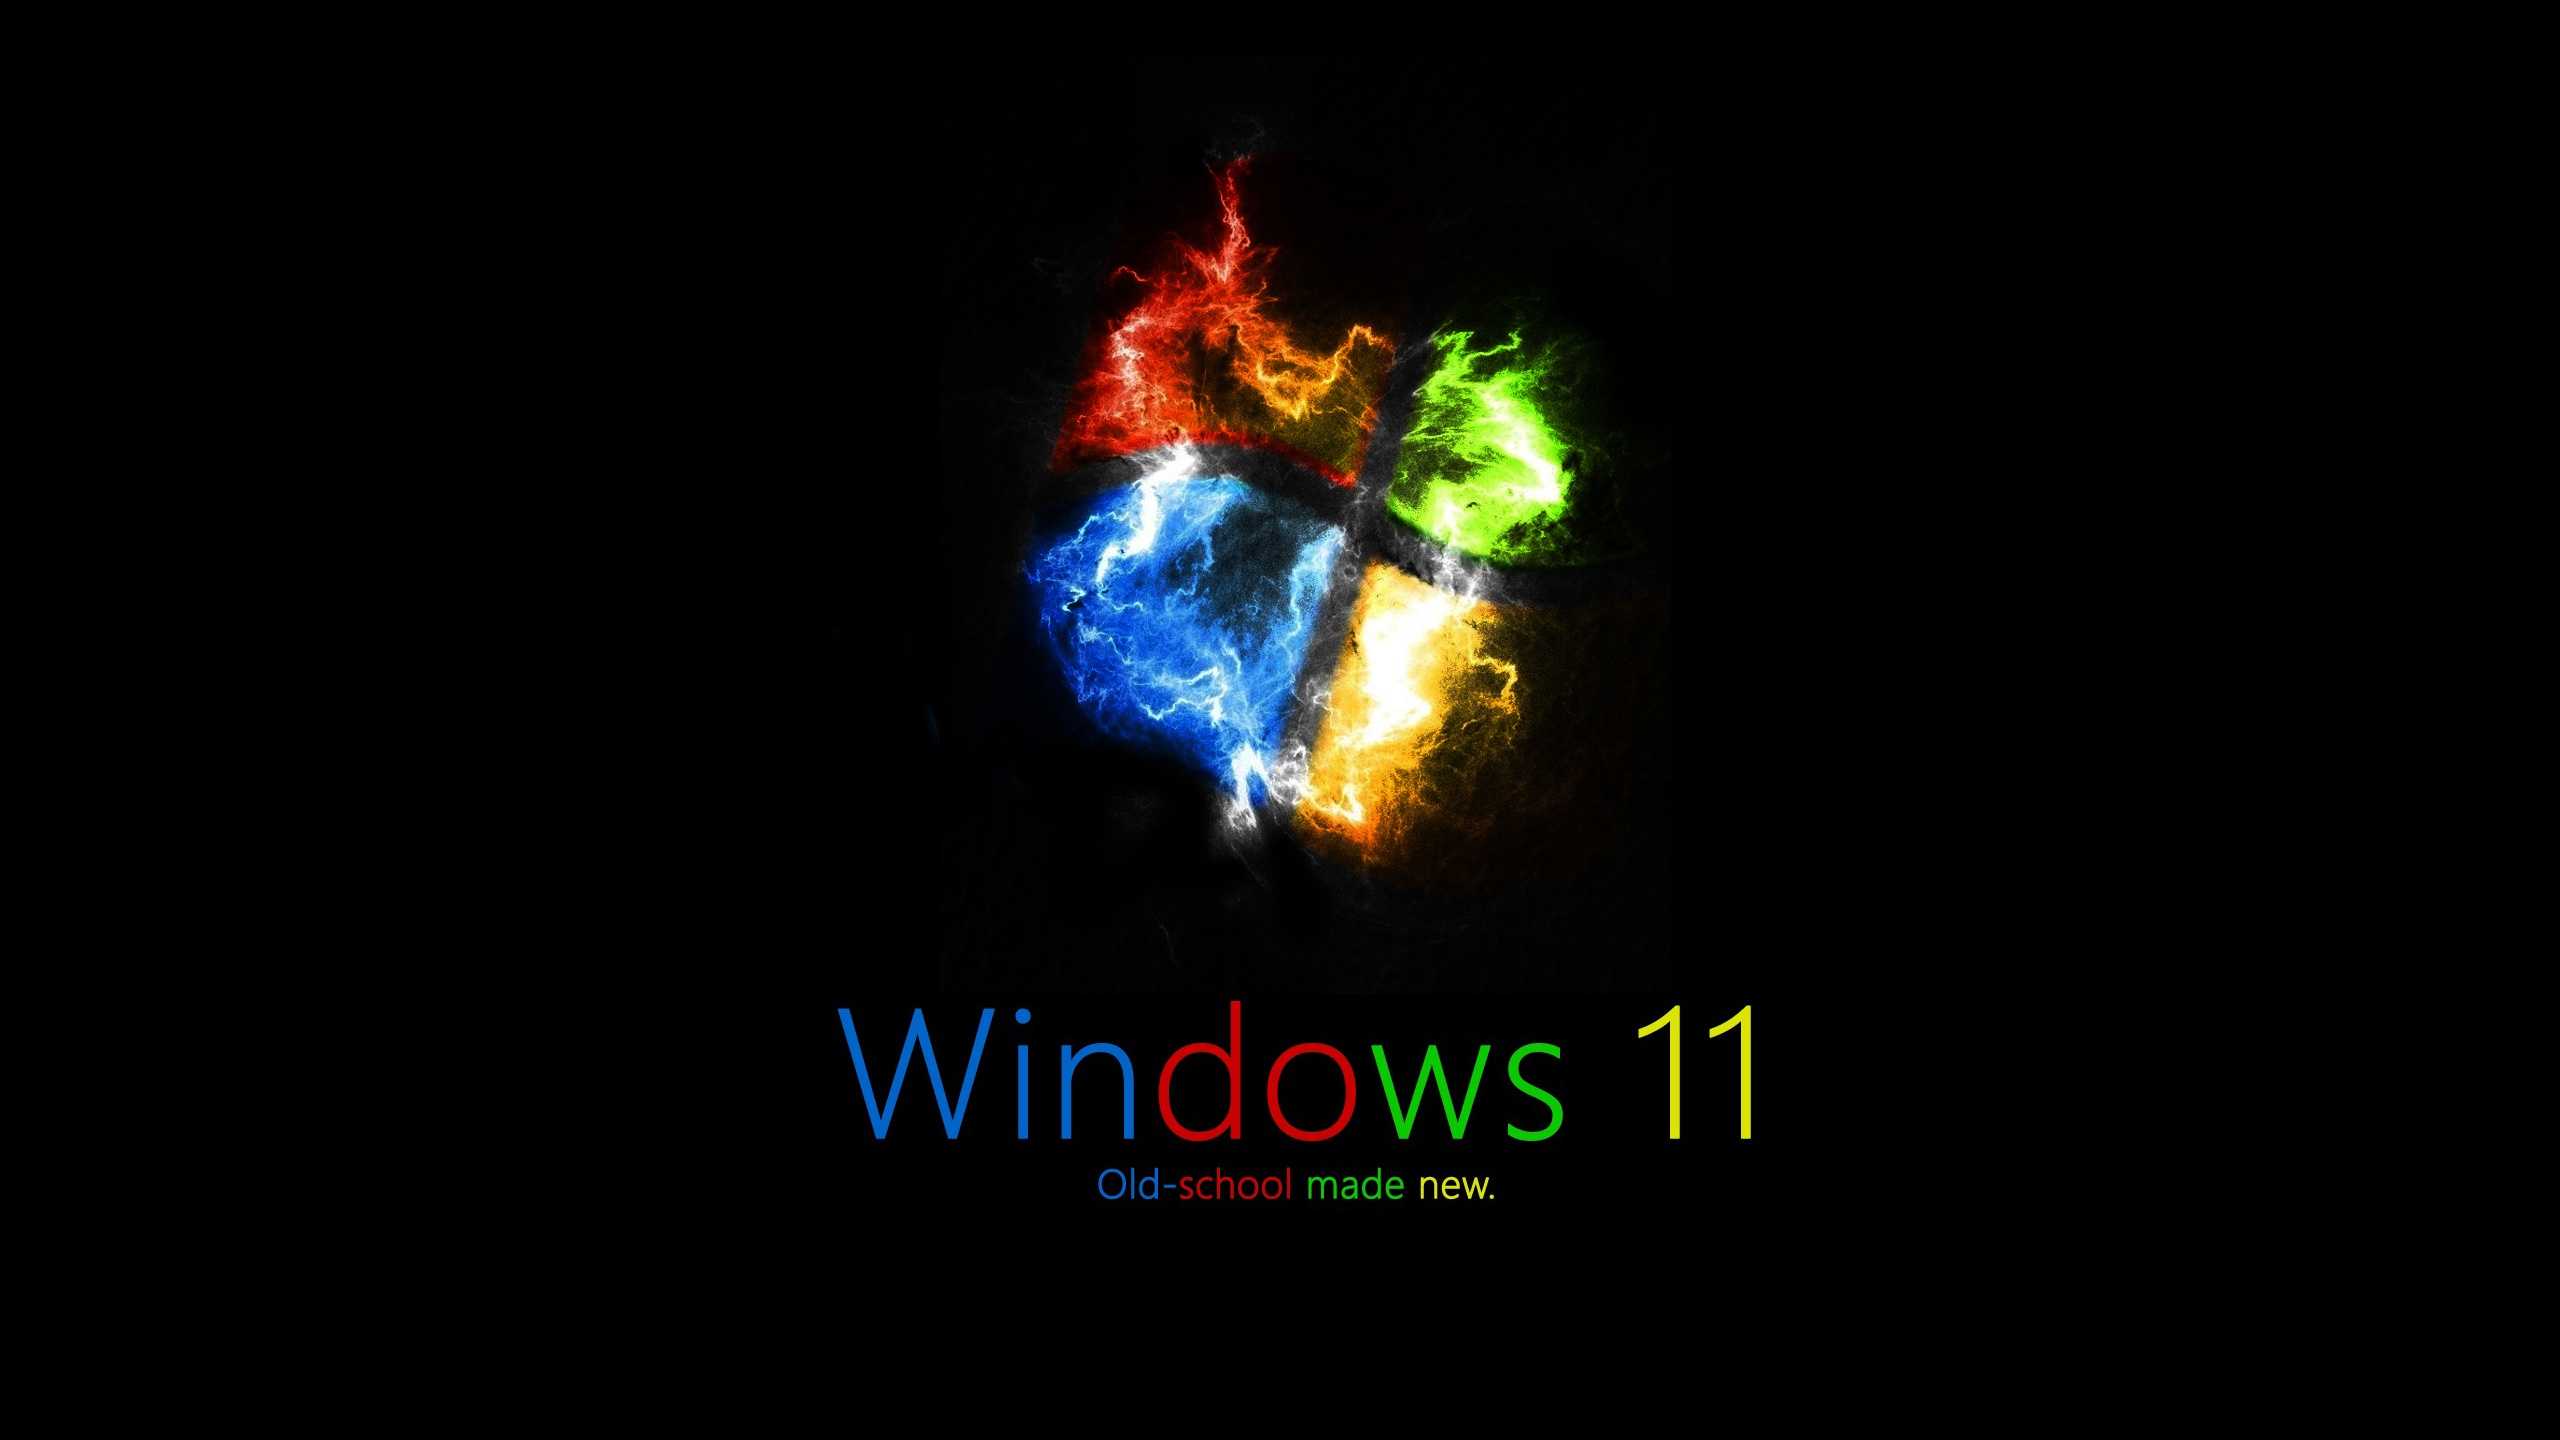 windows 11 live wallpaper 4k download